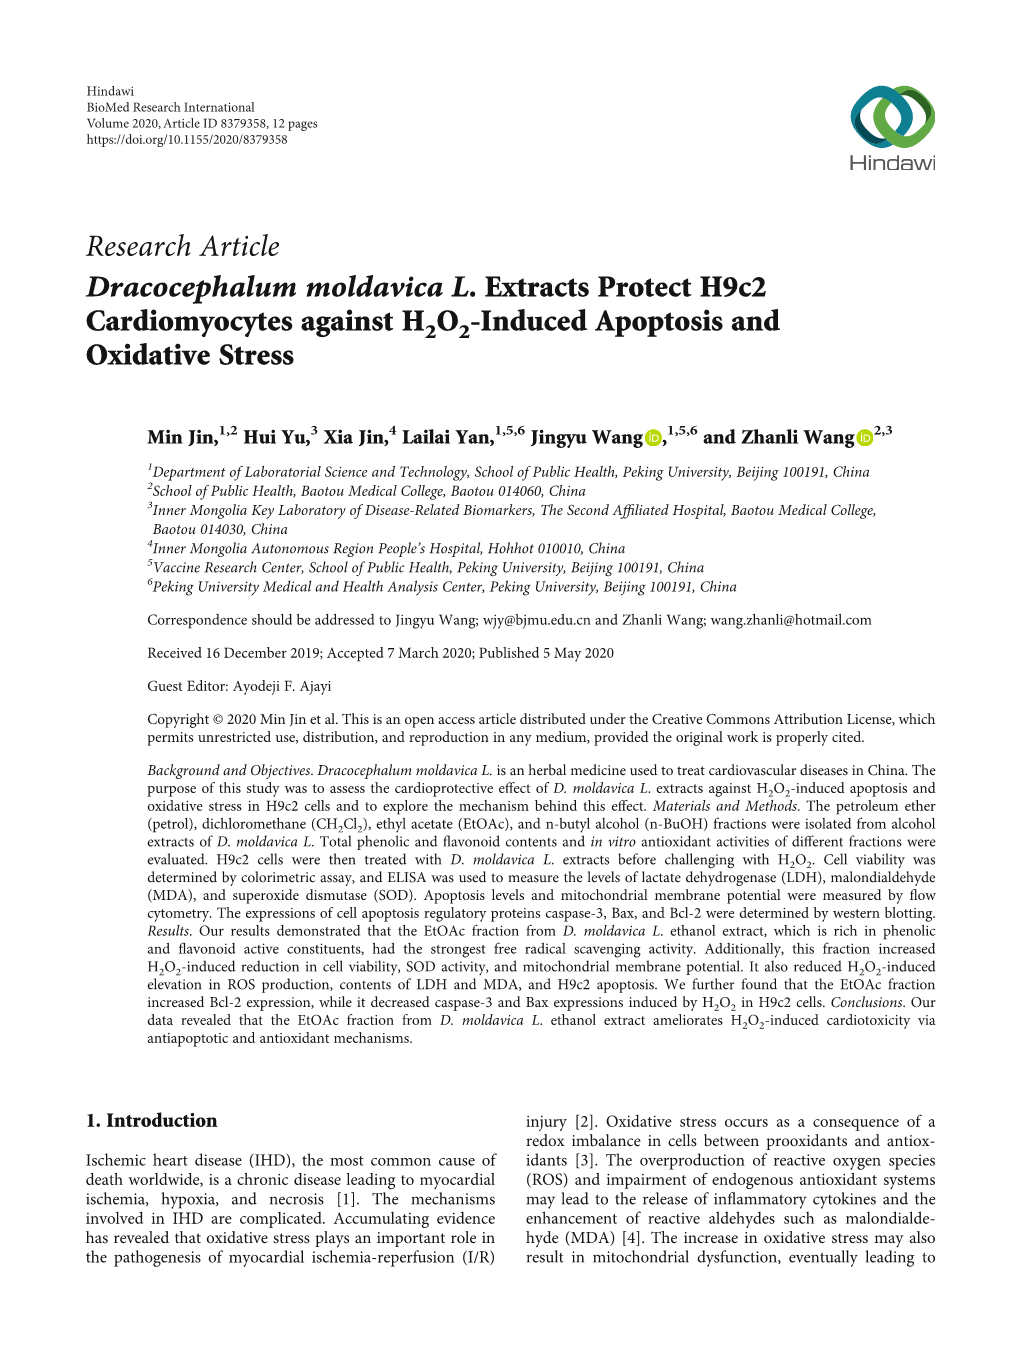 Research Article Dracocephalum Moldavica L